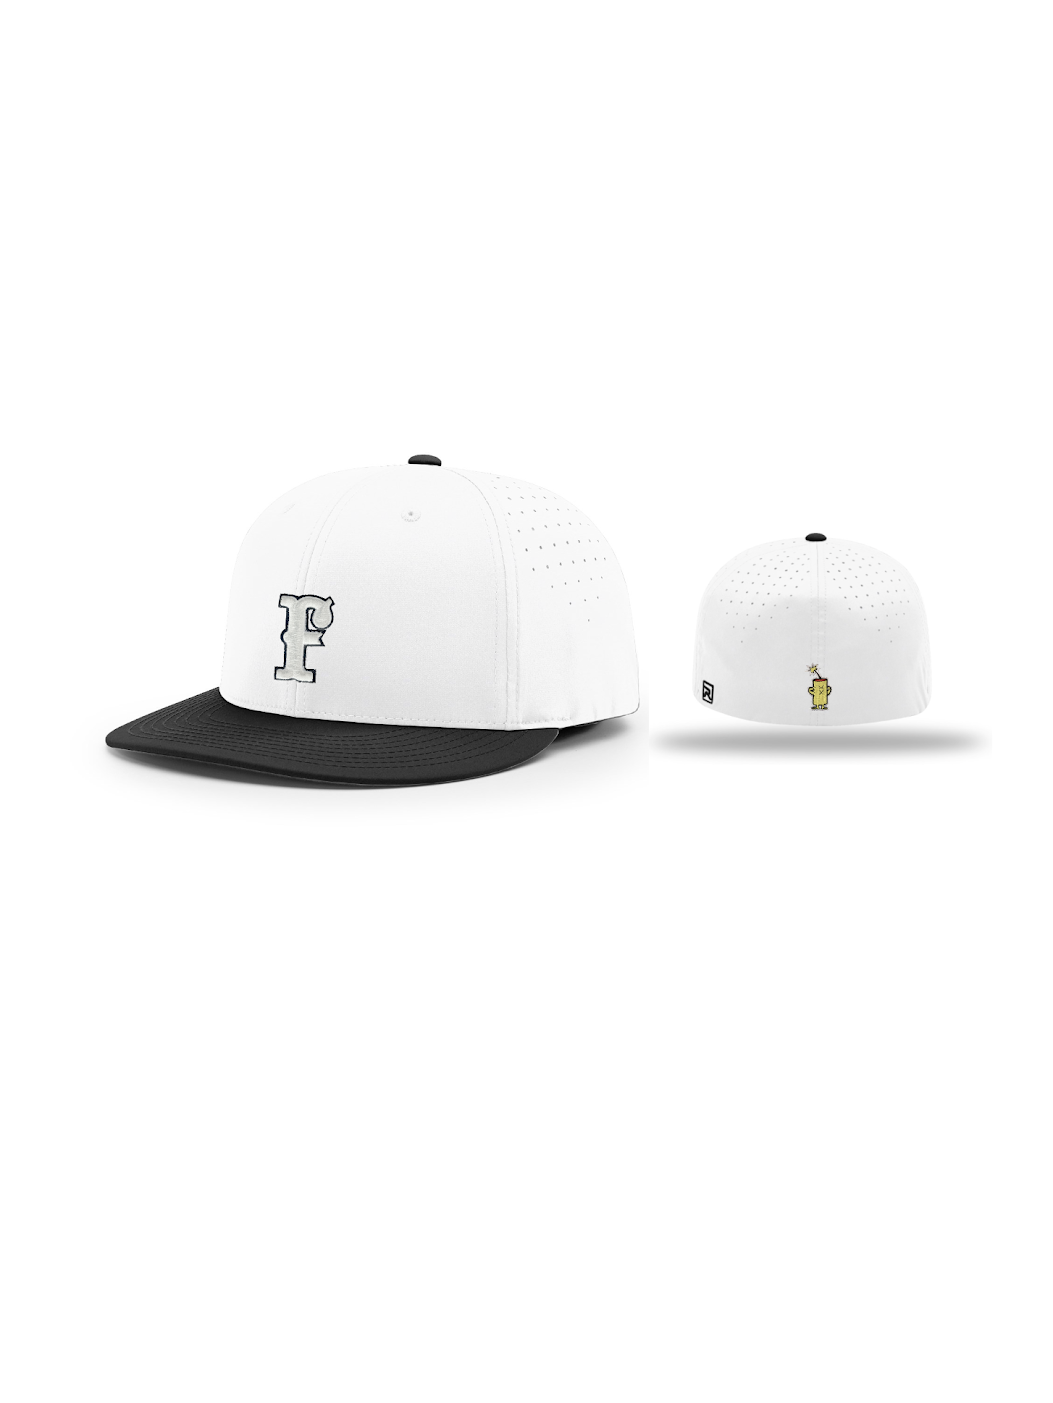 FC R-FLEX Hat (White/Black) - Firecracker Gear Softball